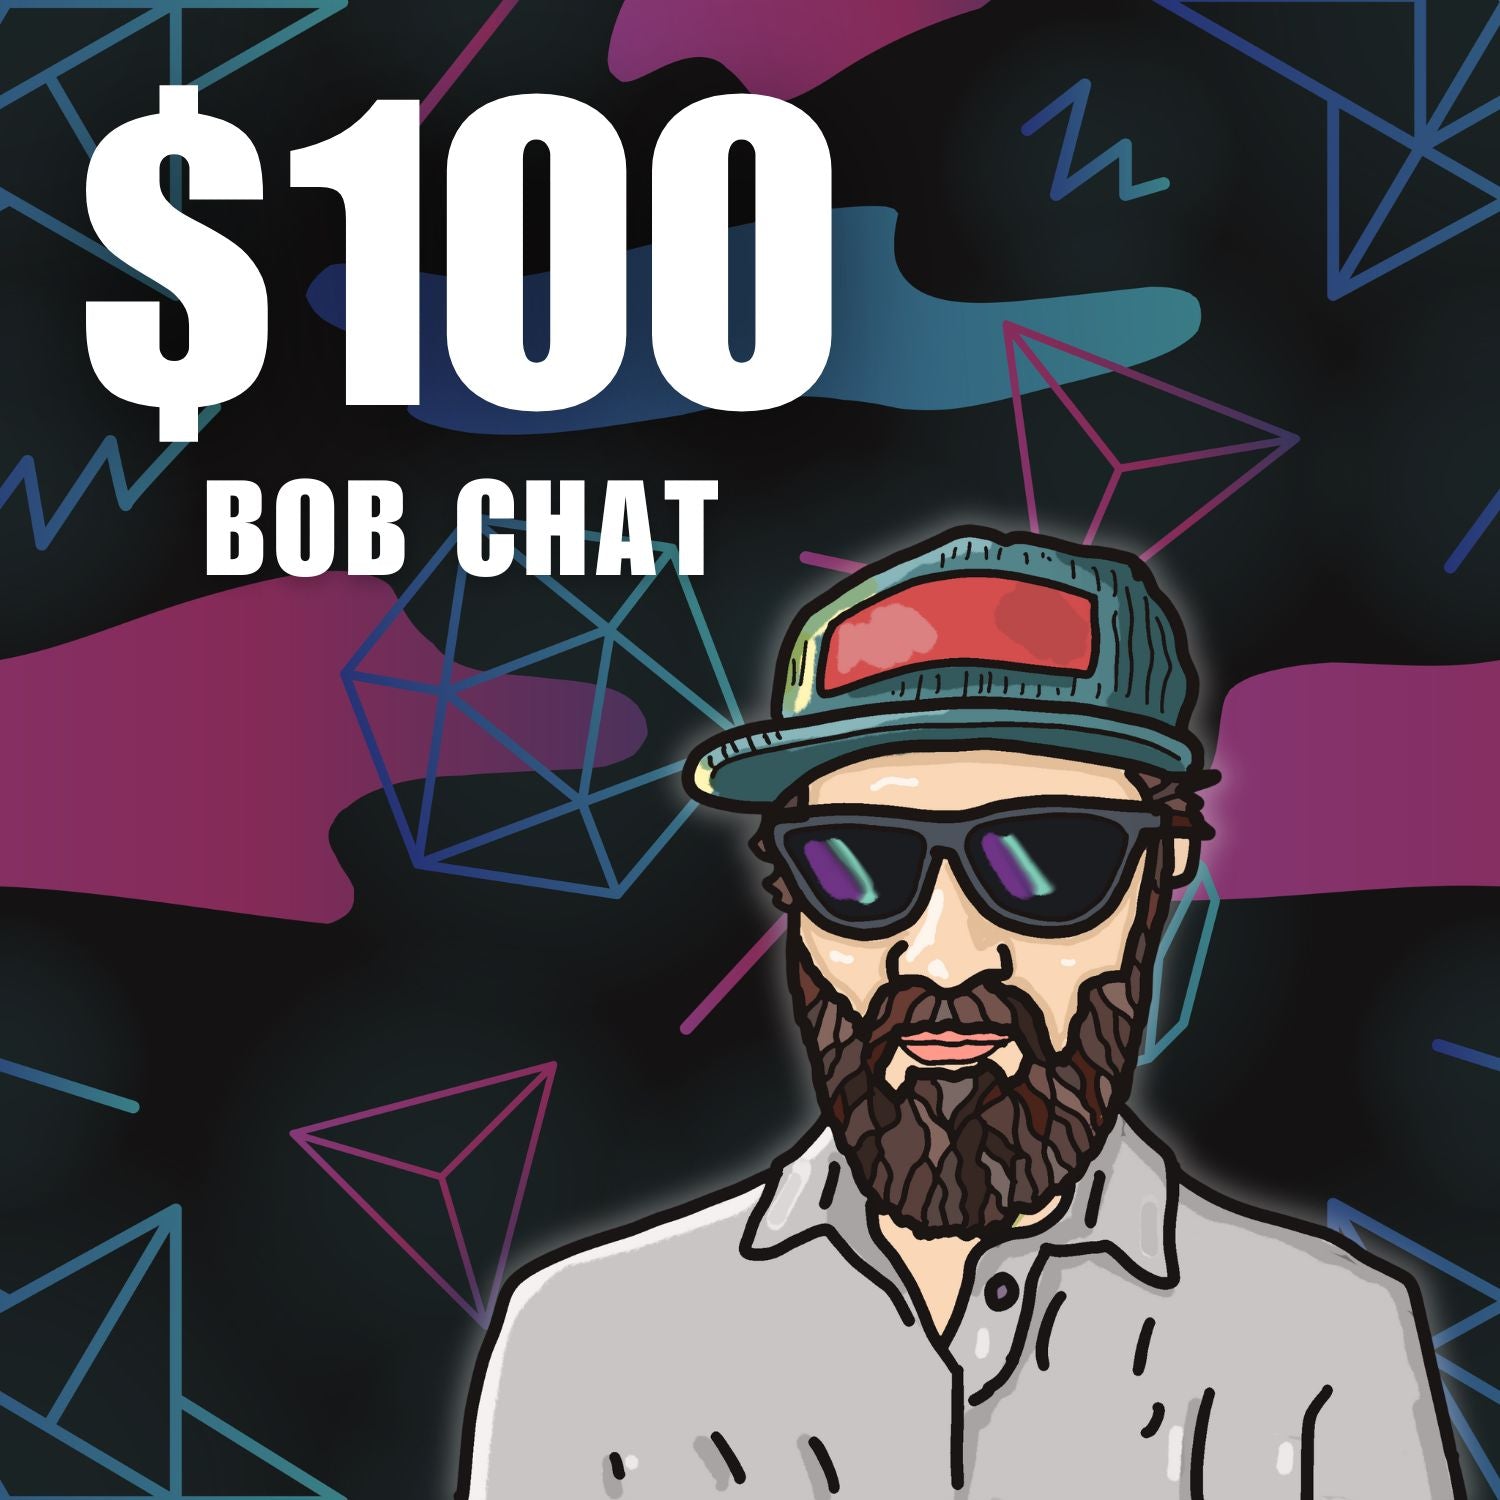 $100 Bob Chat